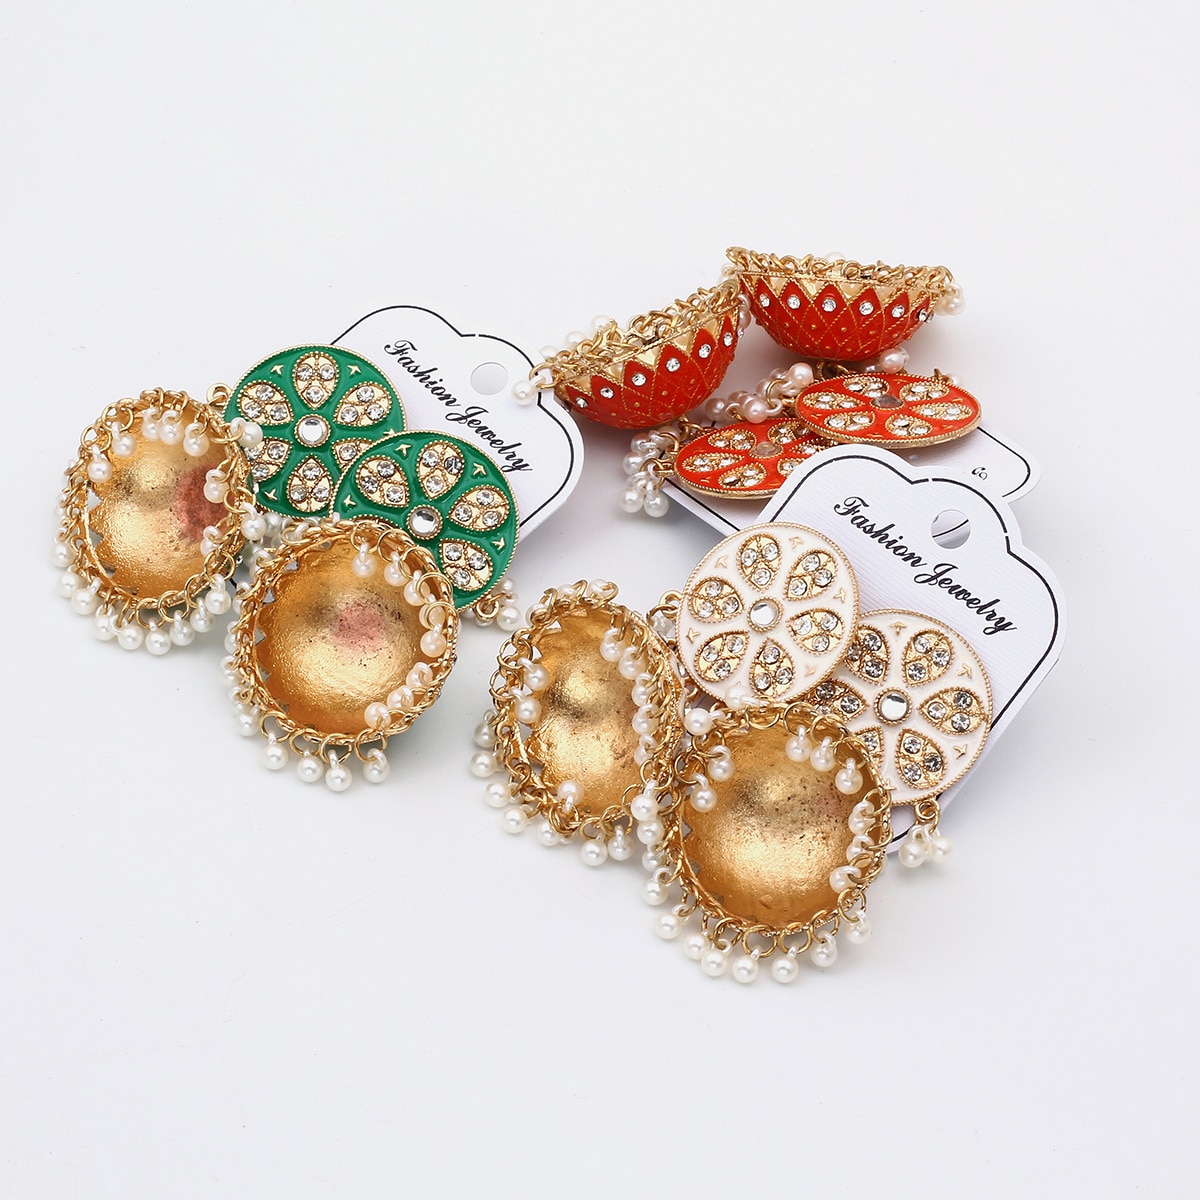 Vintage-Luxury-Green-Dangle-Earrings-for-Women-Pearl-Tassel-White-Crystal-Ethnic-Flower-Earrings-Wed-1005004860986192-7